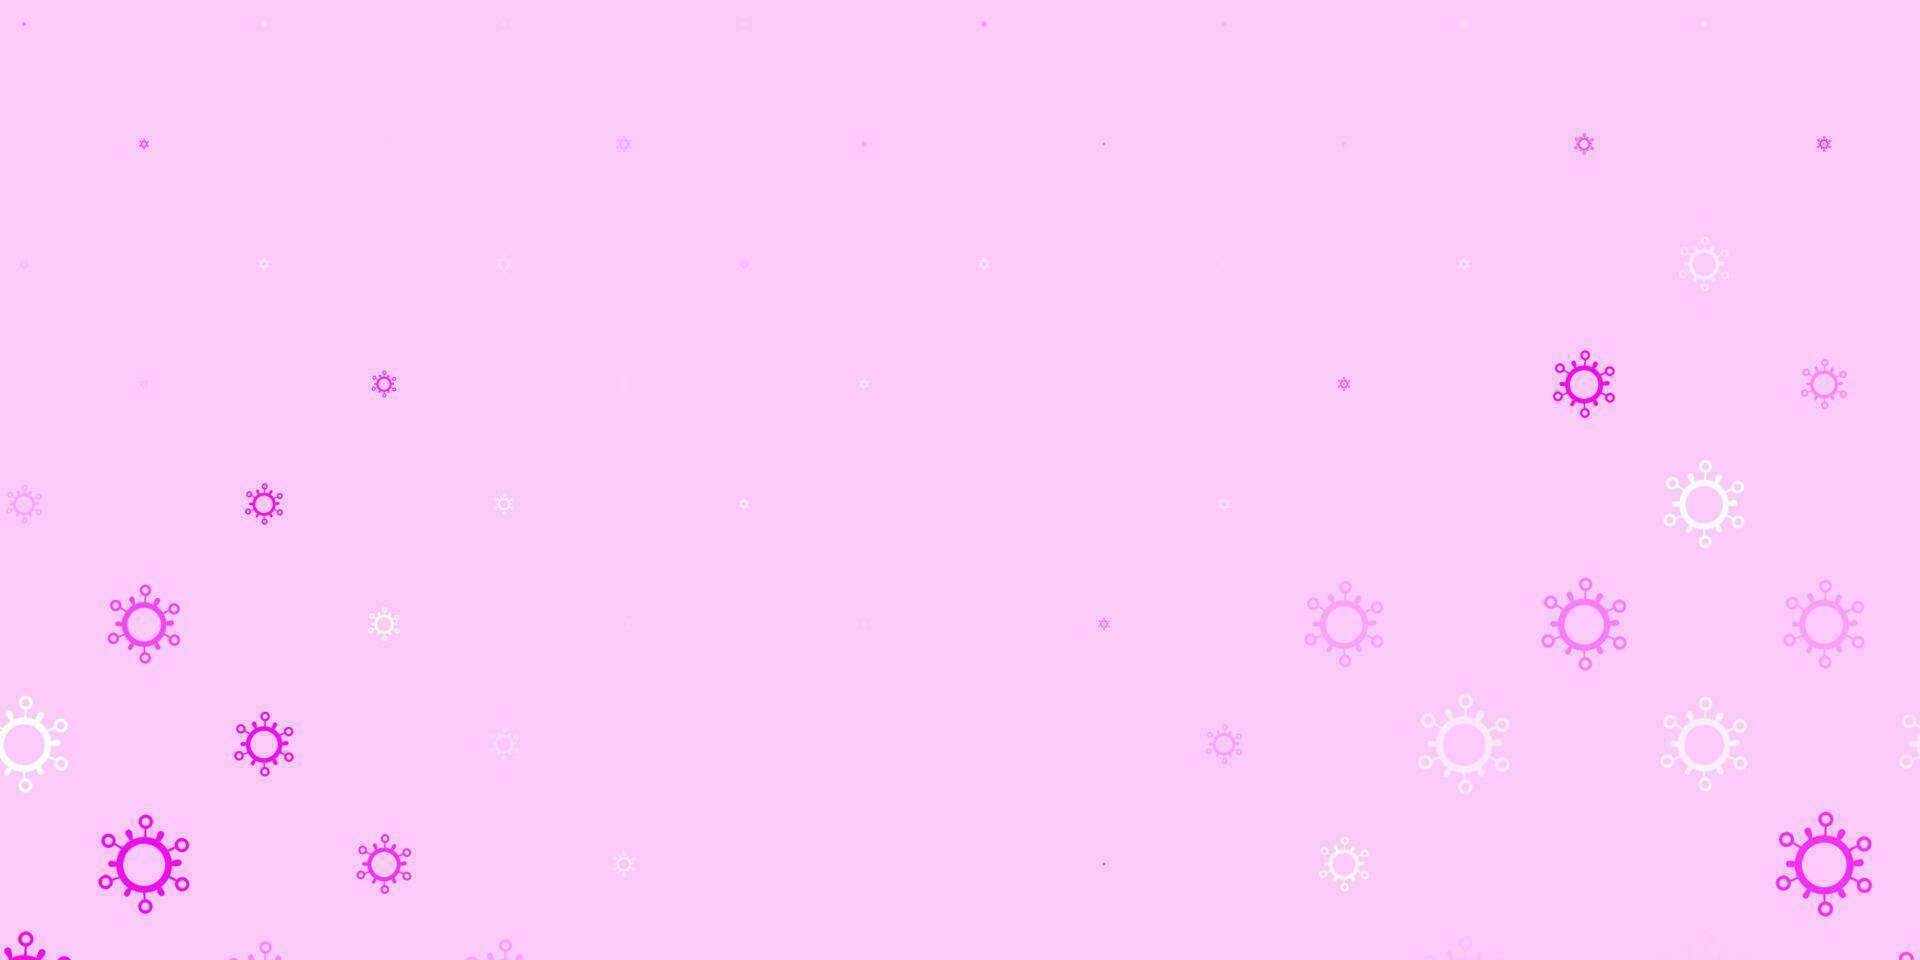 textura vector rosa claro com símbolos de doença.